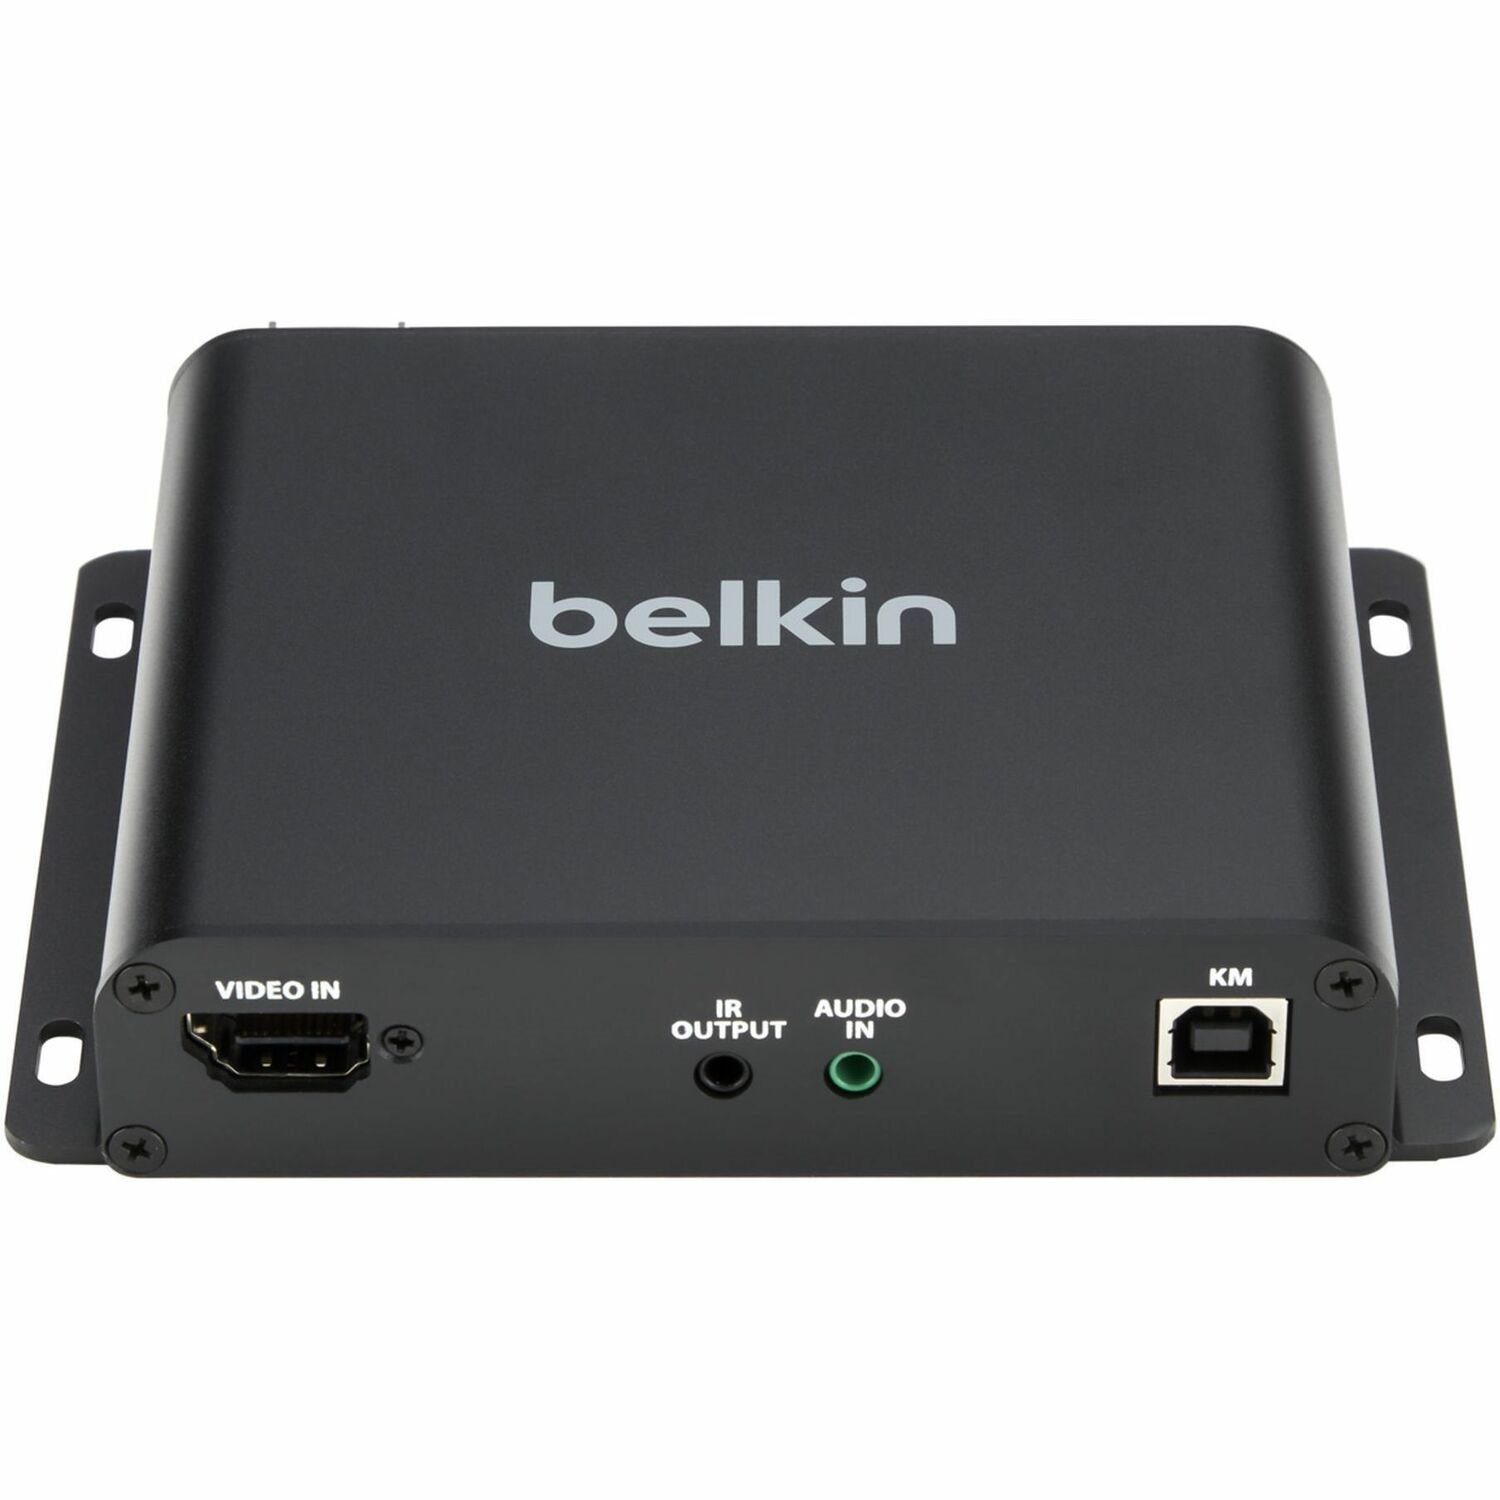 Belkin Extender Transmitter Fiber SFP - Universal Video